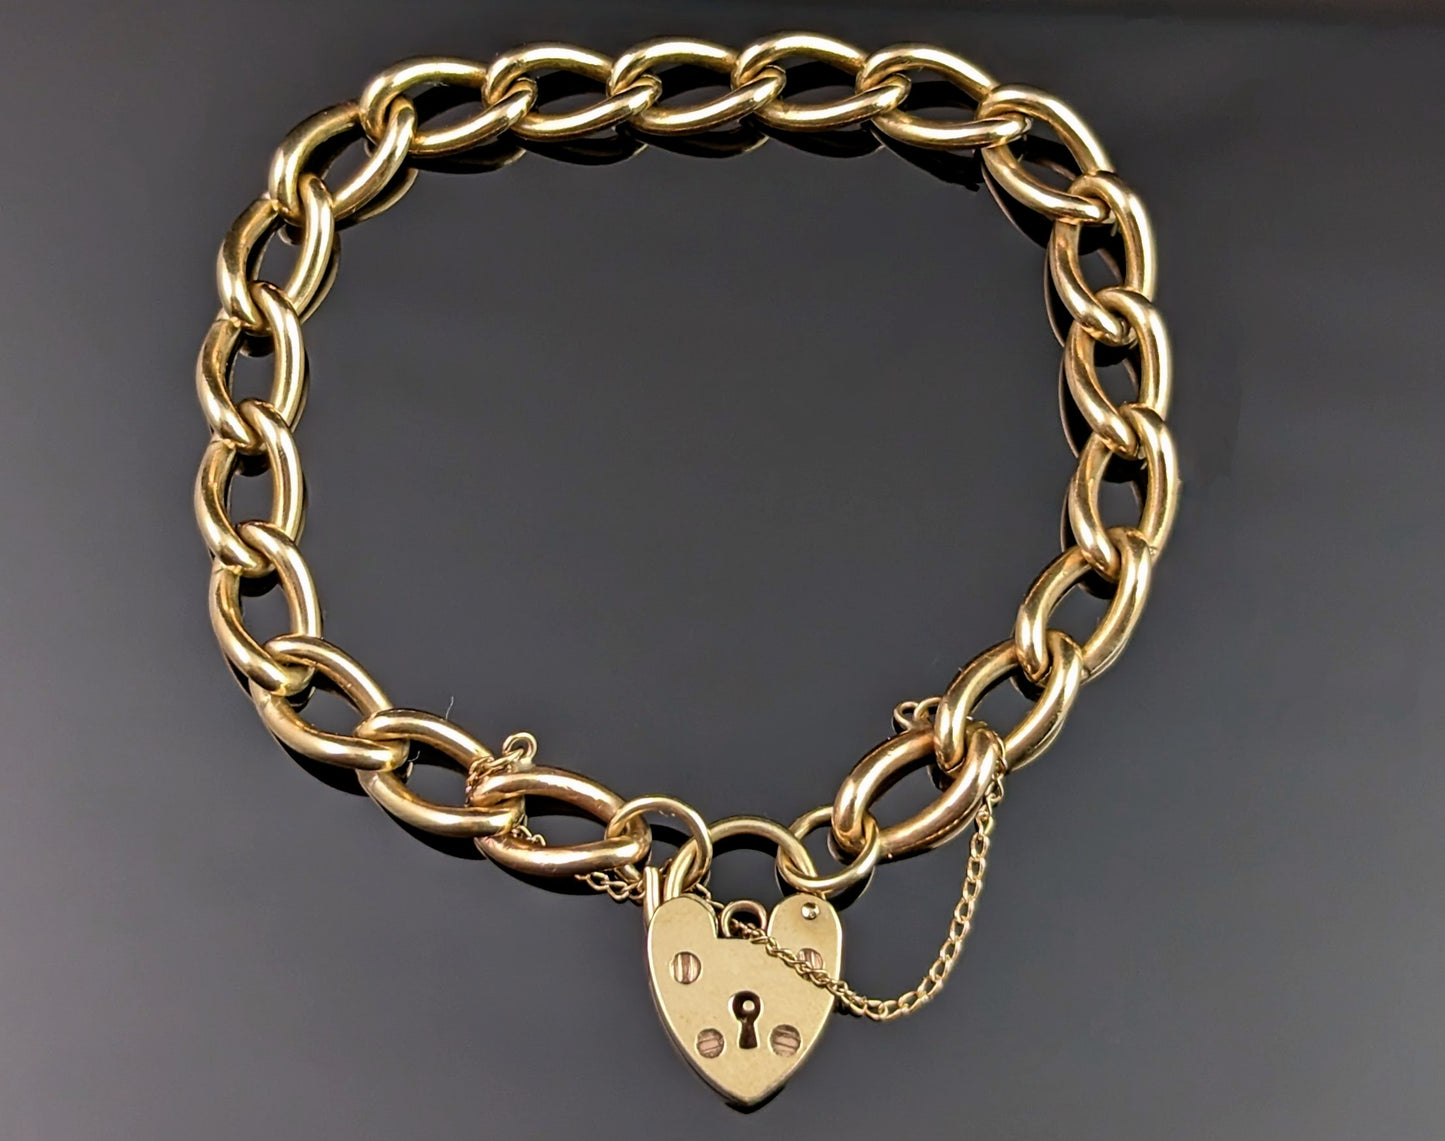 Vintage 9ct gold curb link bracelet, heart padlock clasp